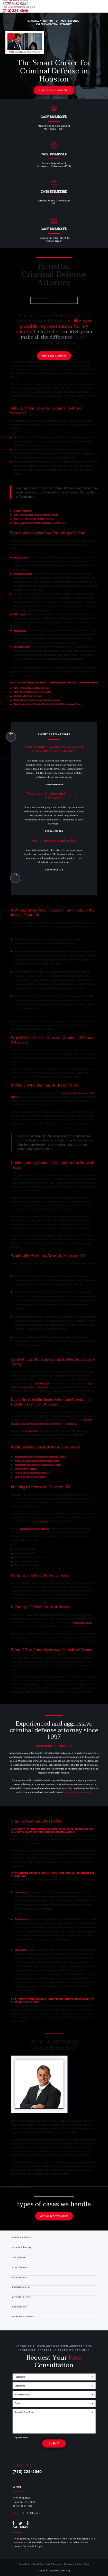 Alma Garcia - Houston TX Lawyers